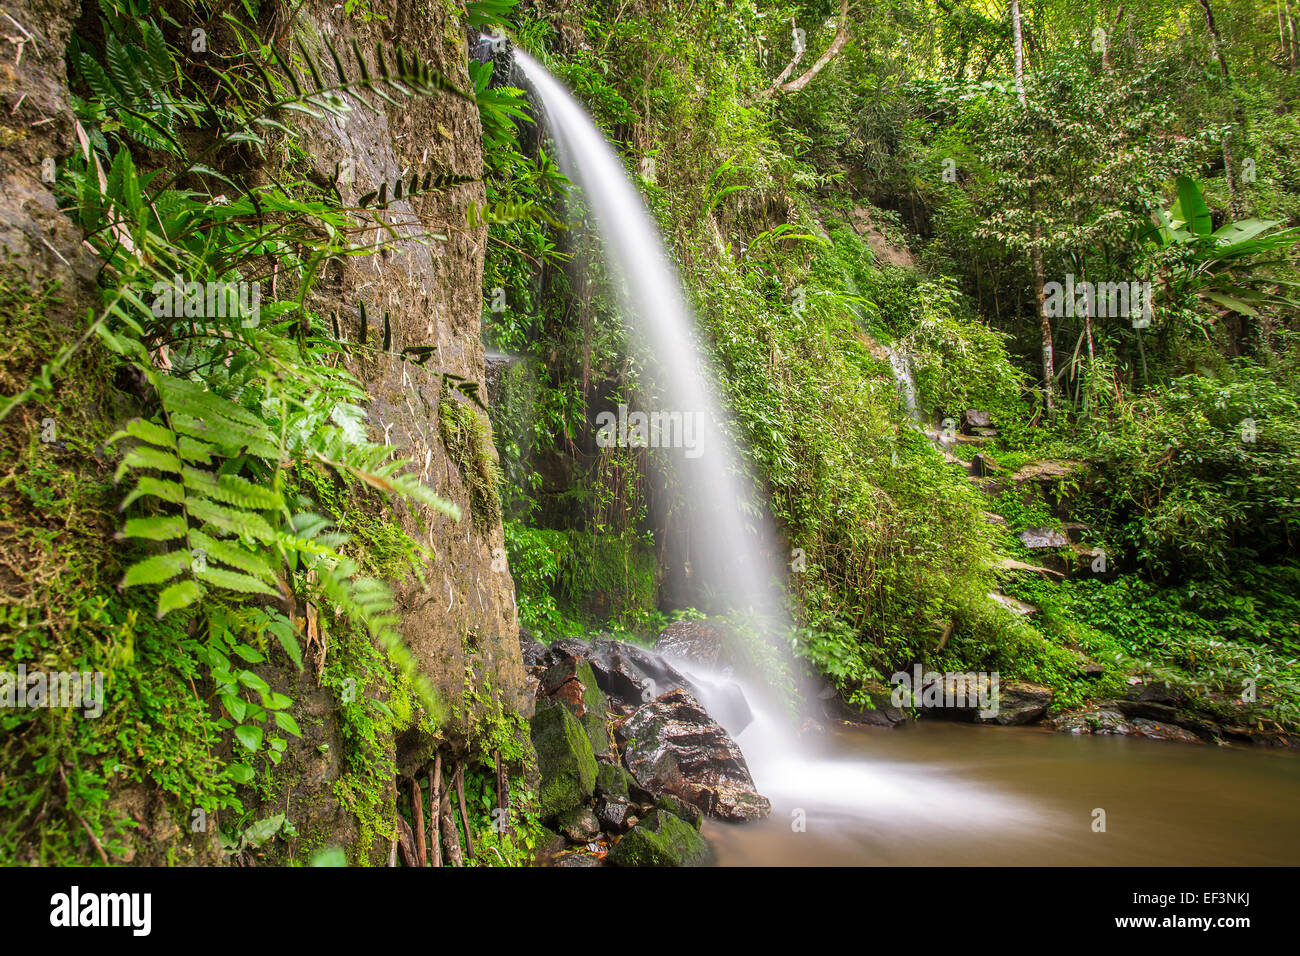 Long exposure shot of a beautiful waterfall in the jungle Stock Photo